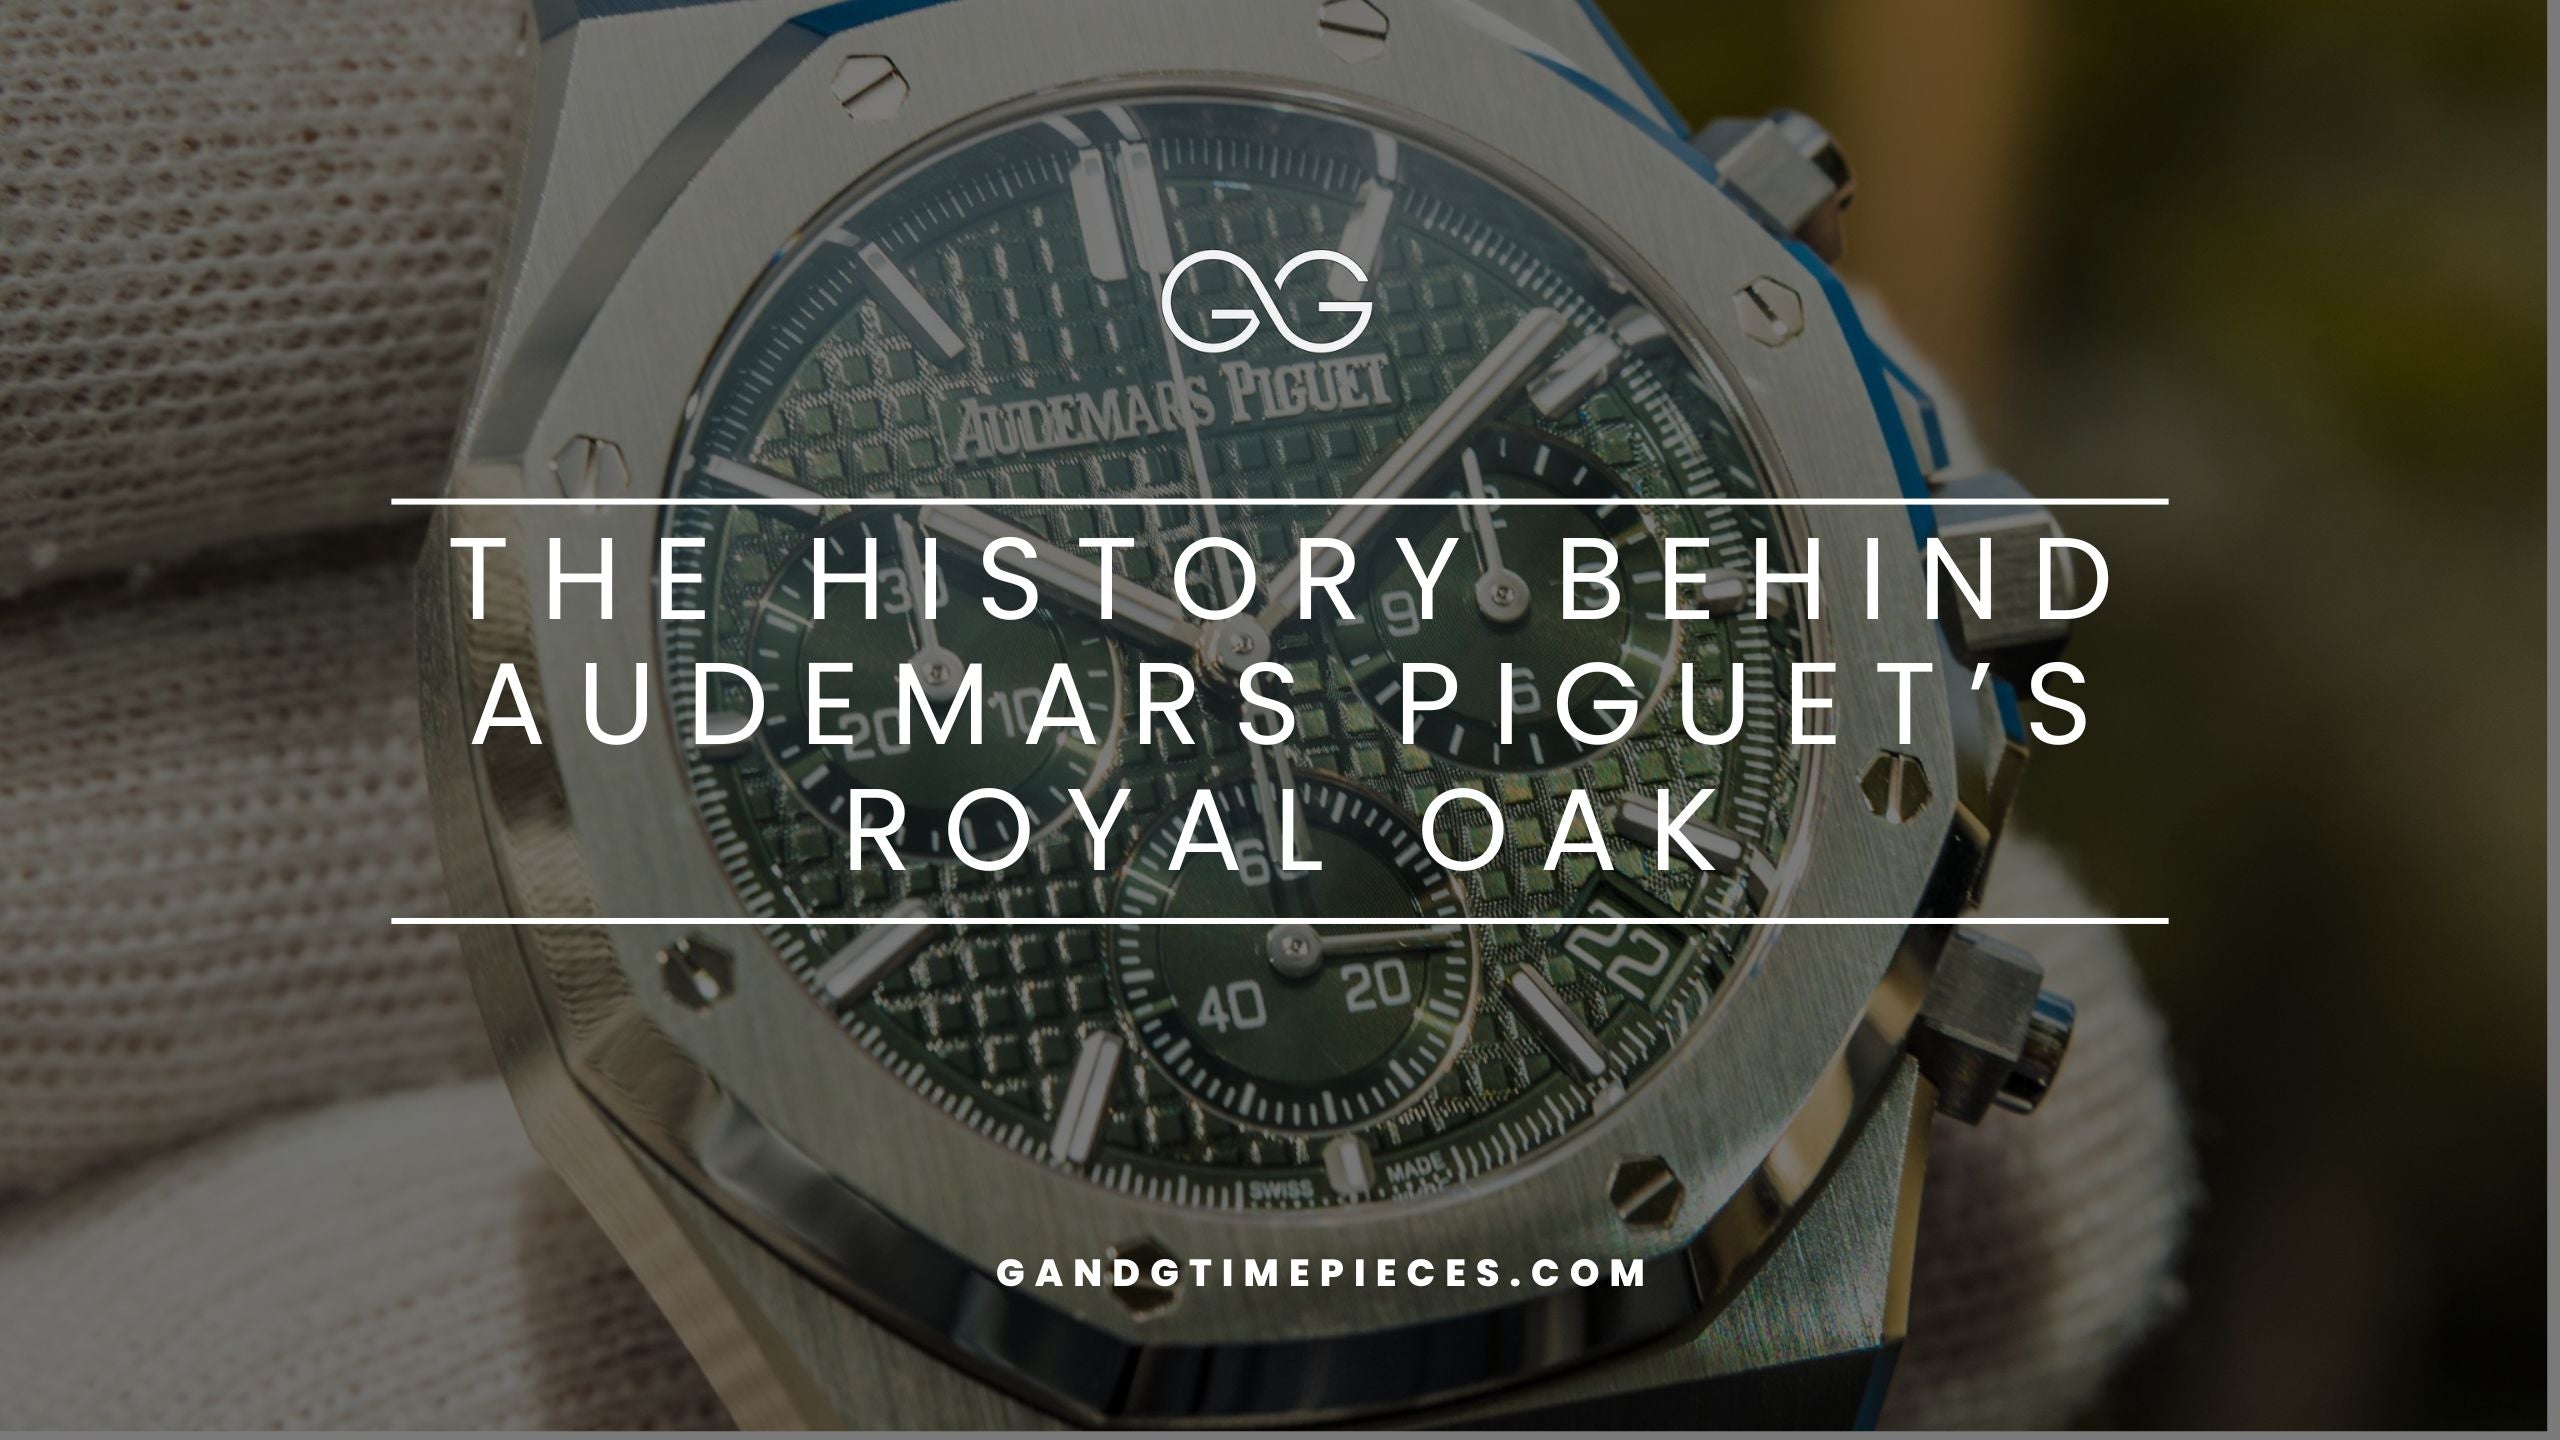 The History Behind Audemars Piguet’s Royal Oak